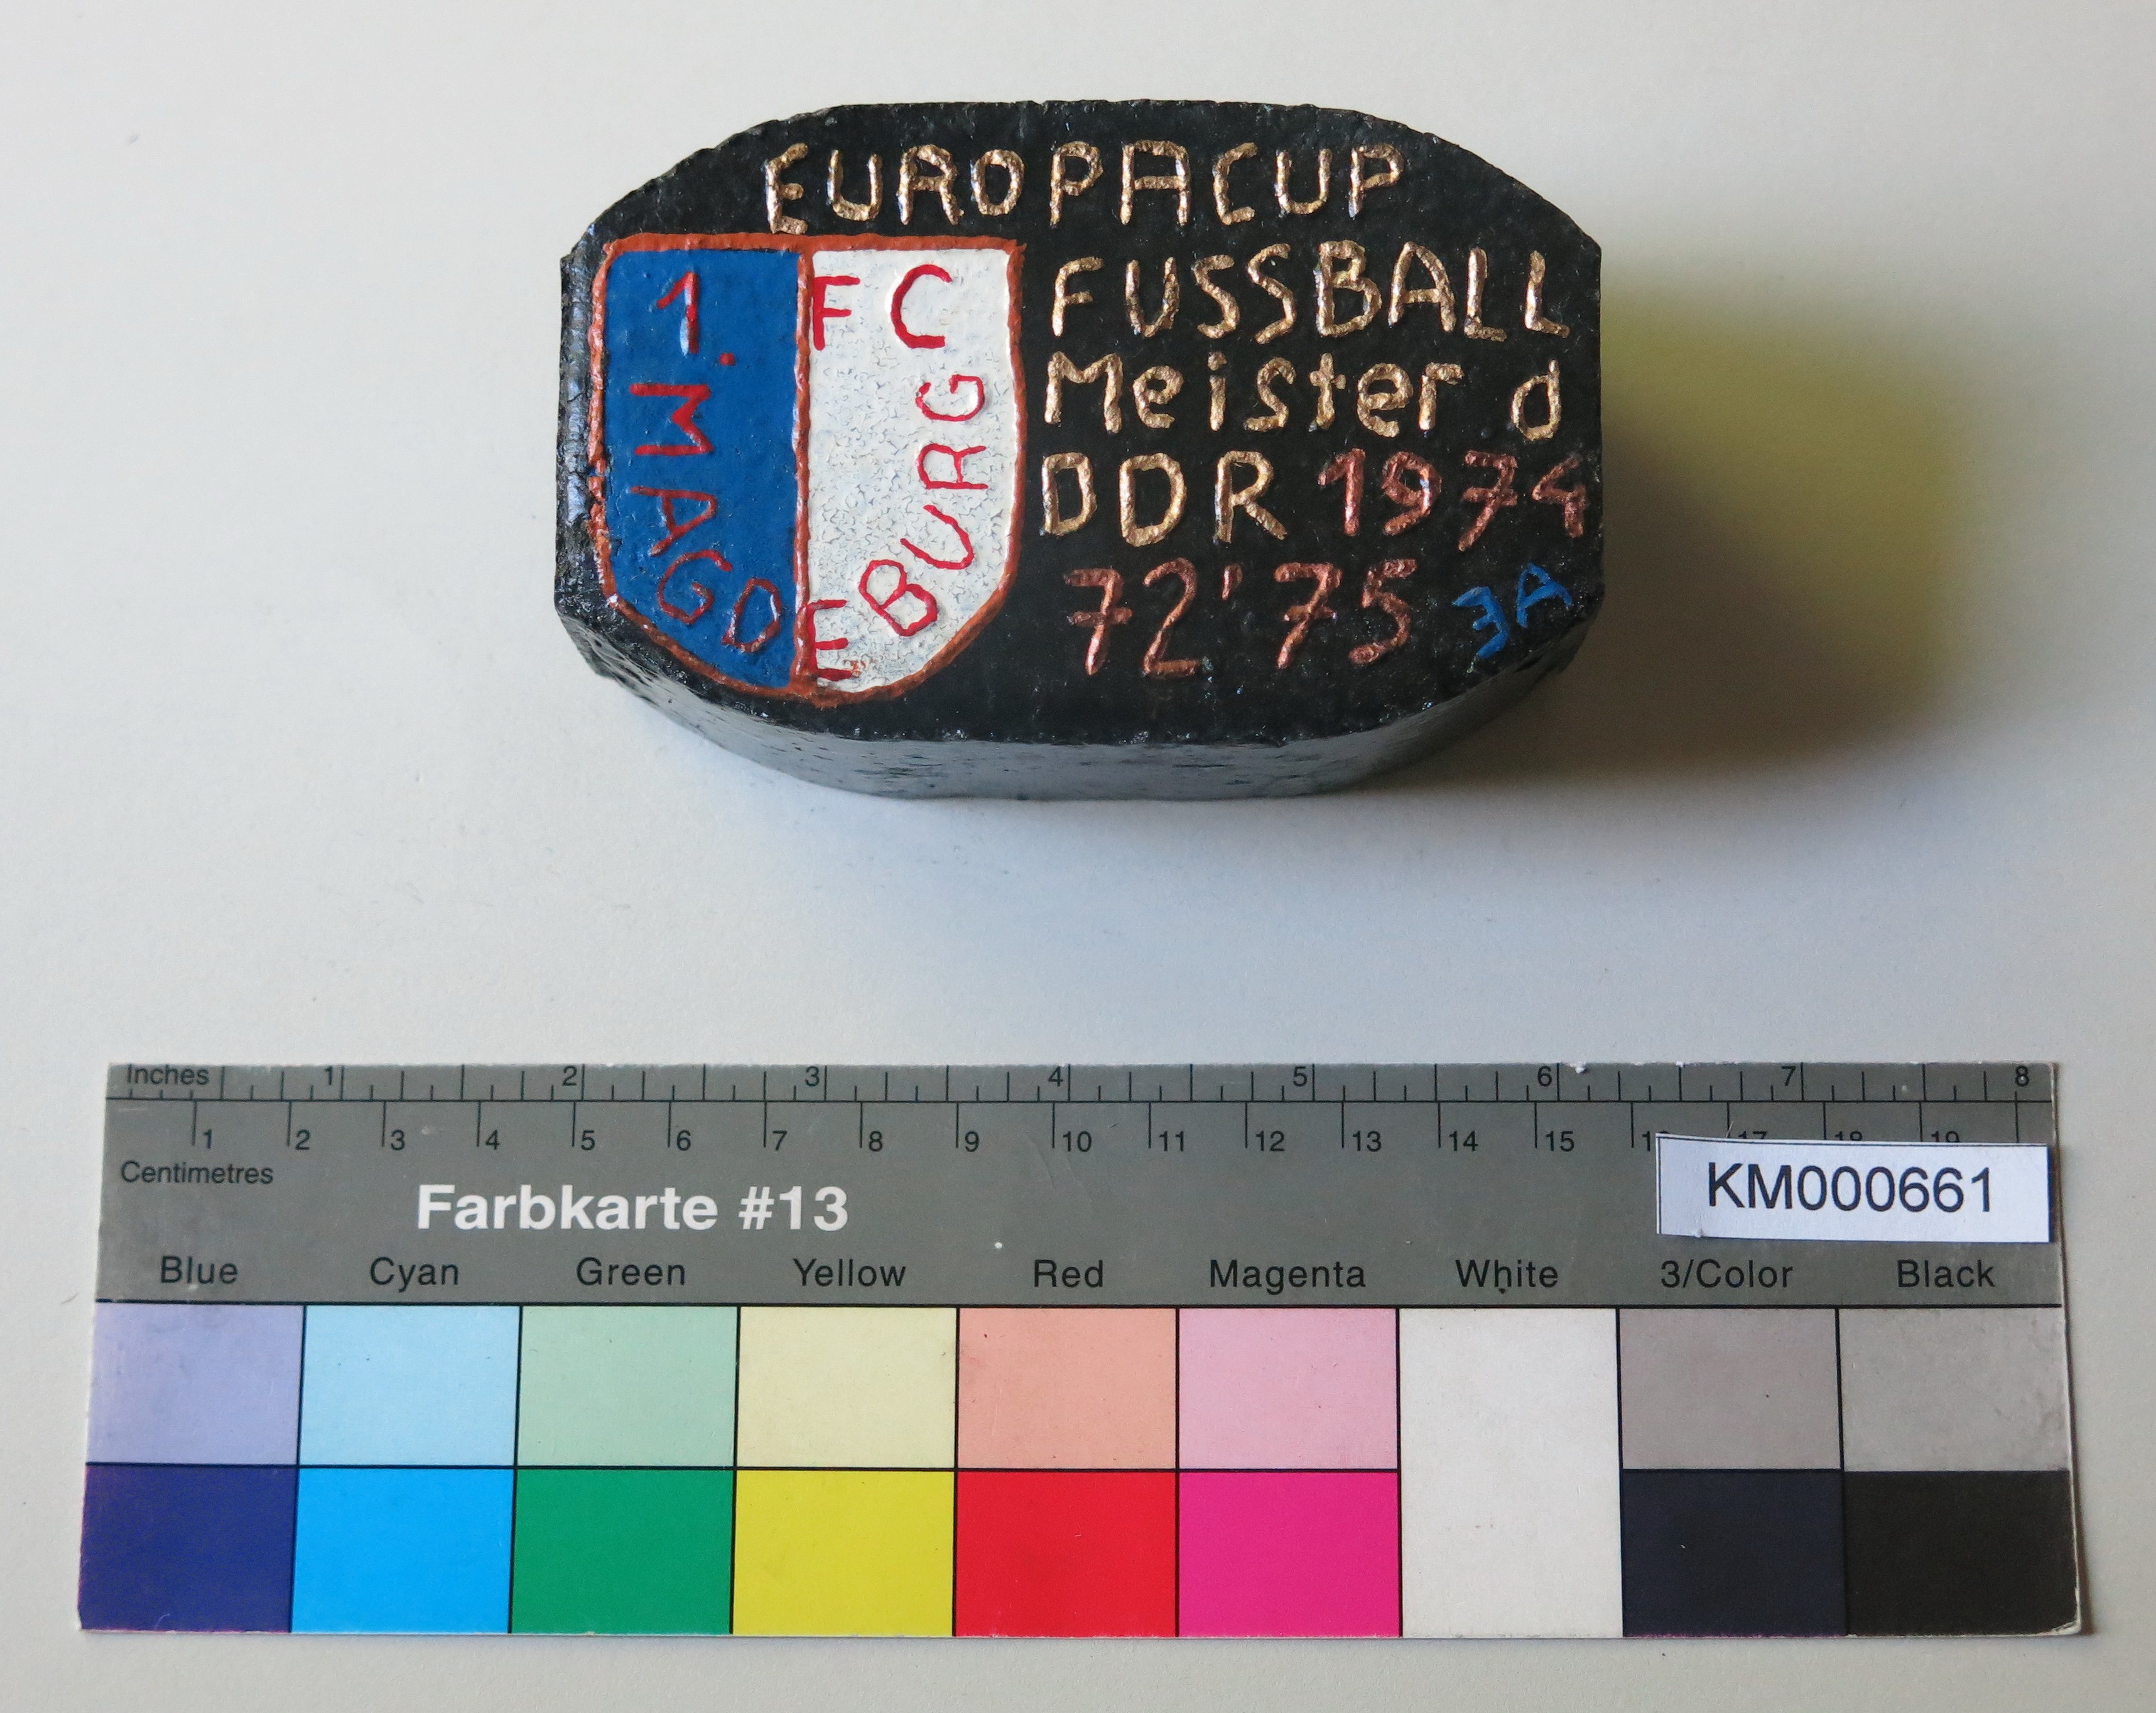 Zierbrikett "EUROPACUP FUSSBALL Meister d DDR 1974 72' 75 3A " (Energiefabrik Knappenrode CC BY-SA)